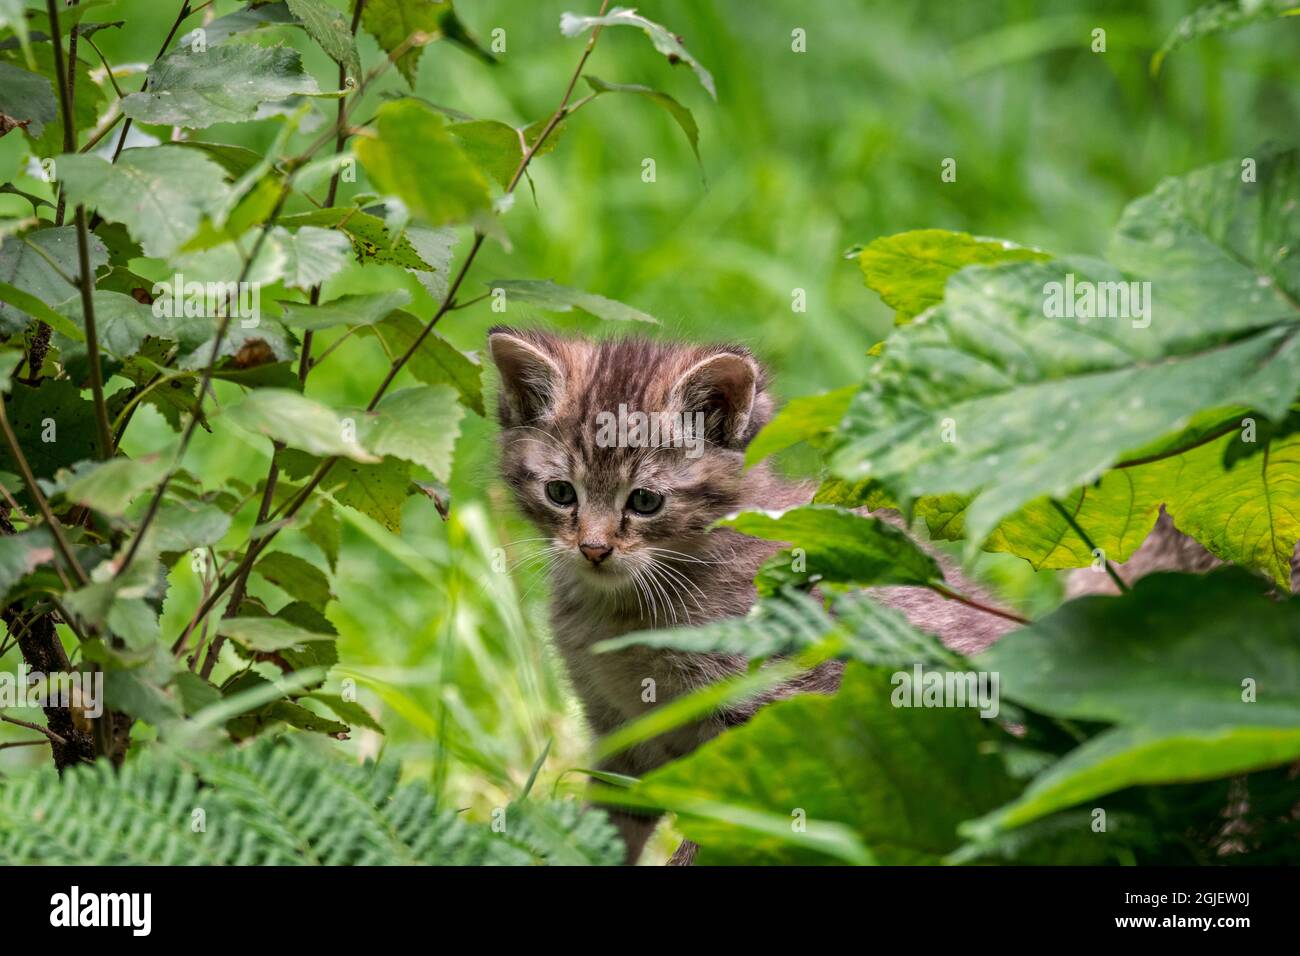 Hidden young European wildcat / wild cat (Felis silvestris silvestris) kitten looking through leaves of underbrush vegetation in forest Stock Photo